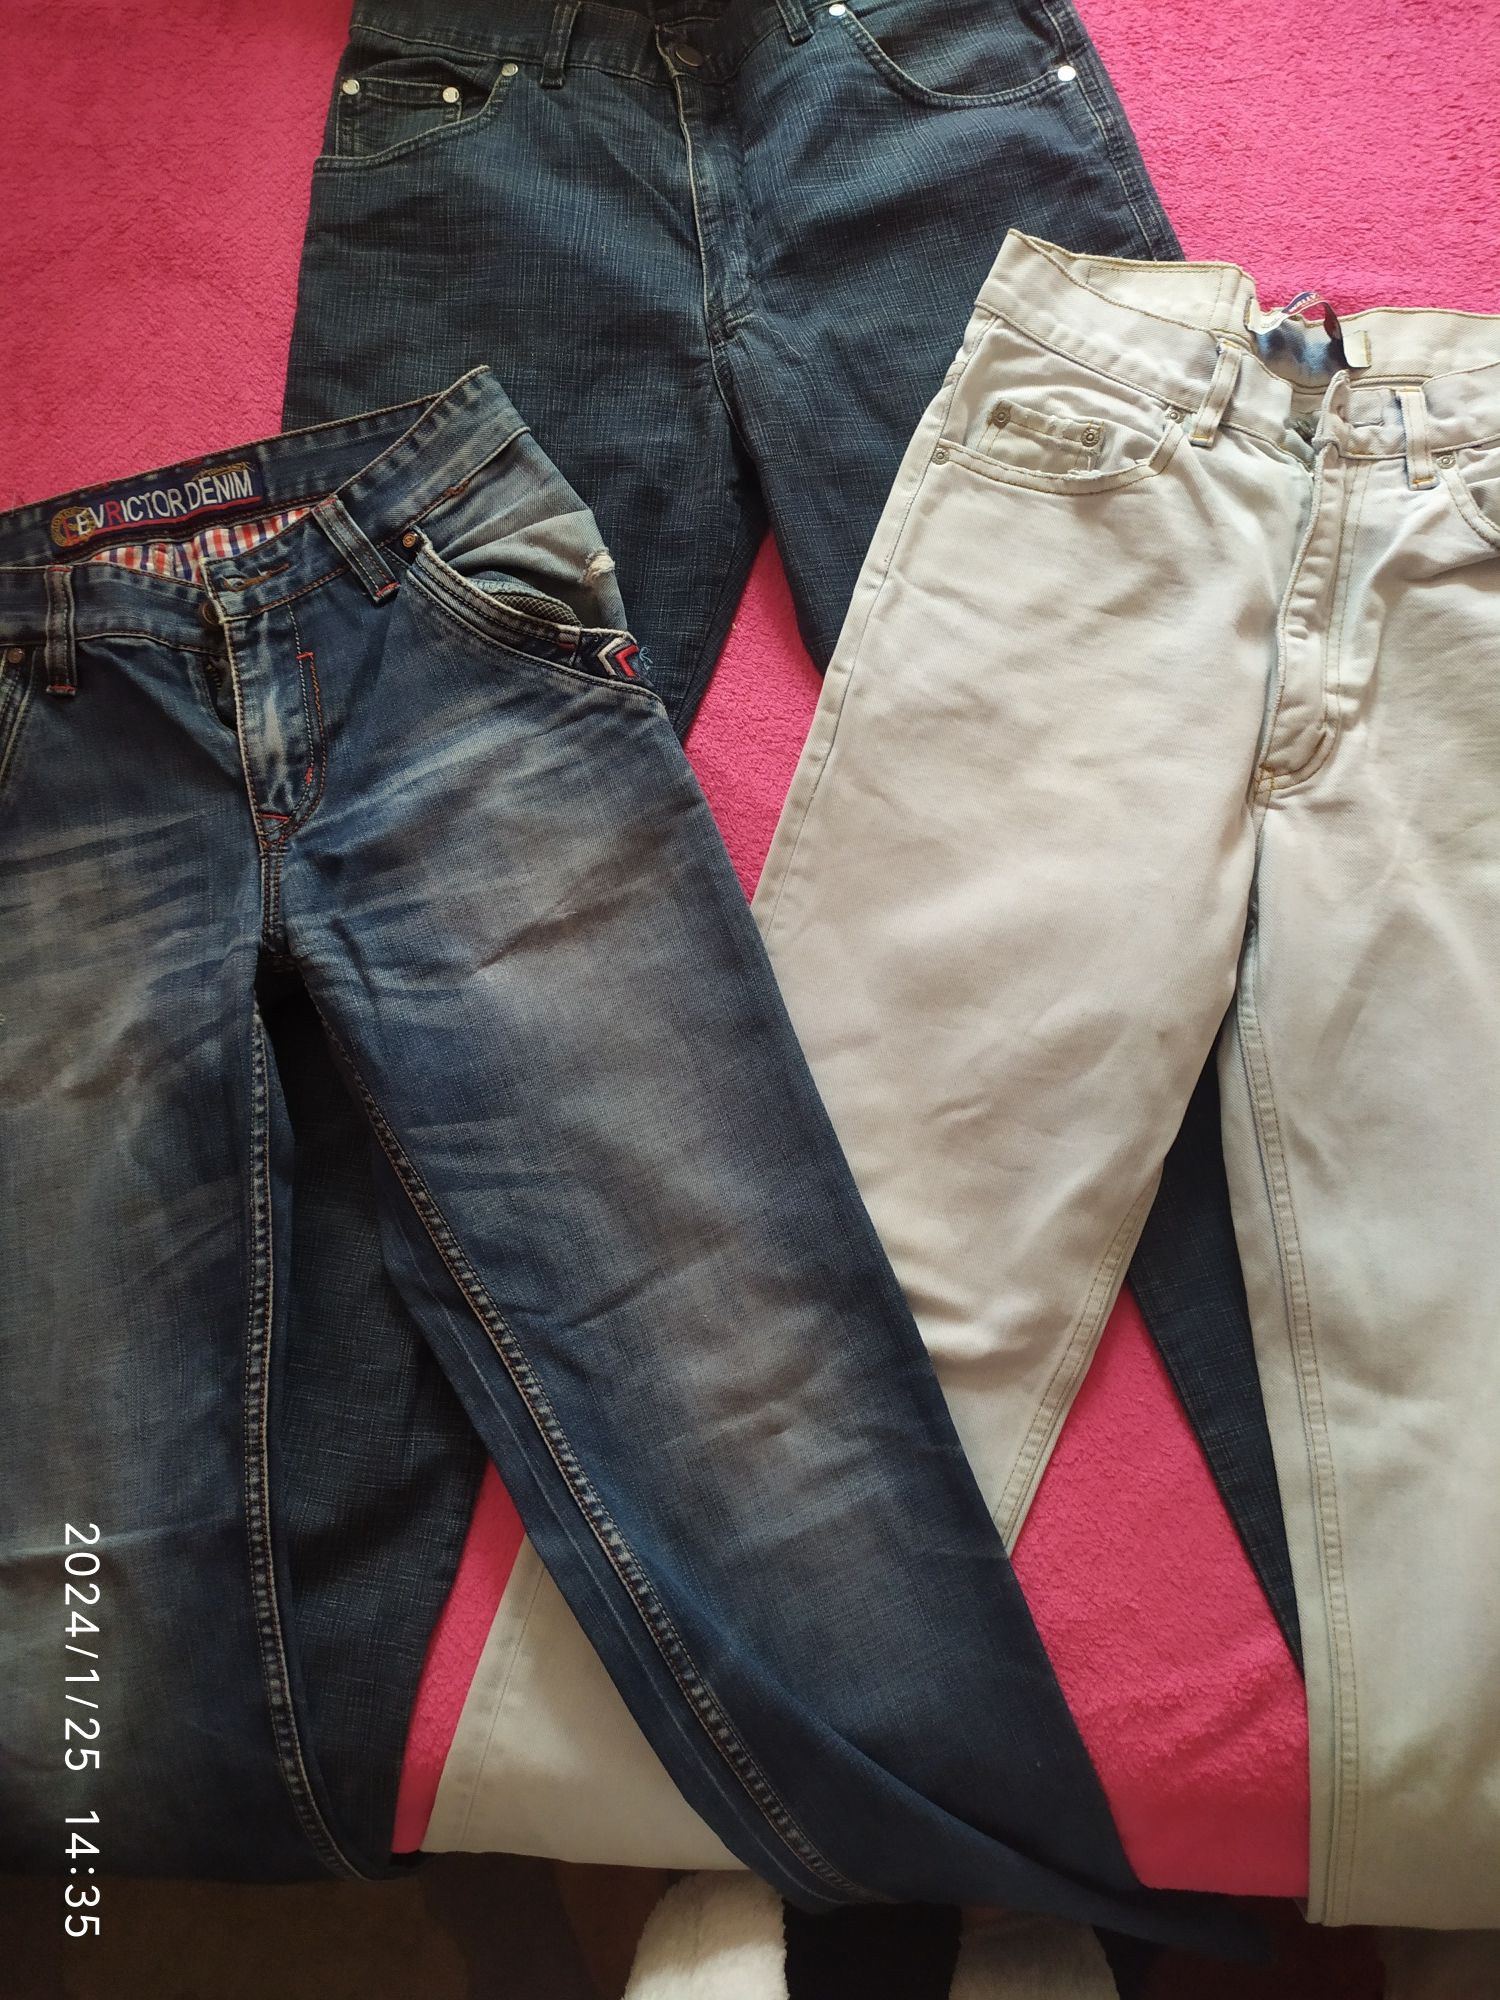 Мужские джинсы, разные цвета, фасоны цены